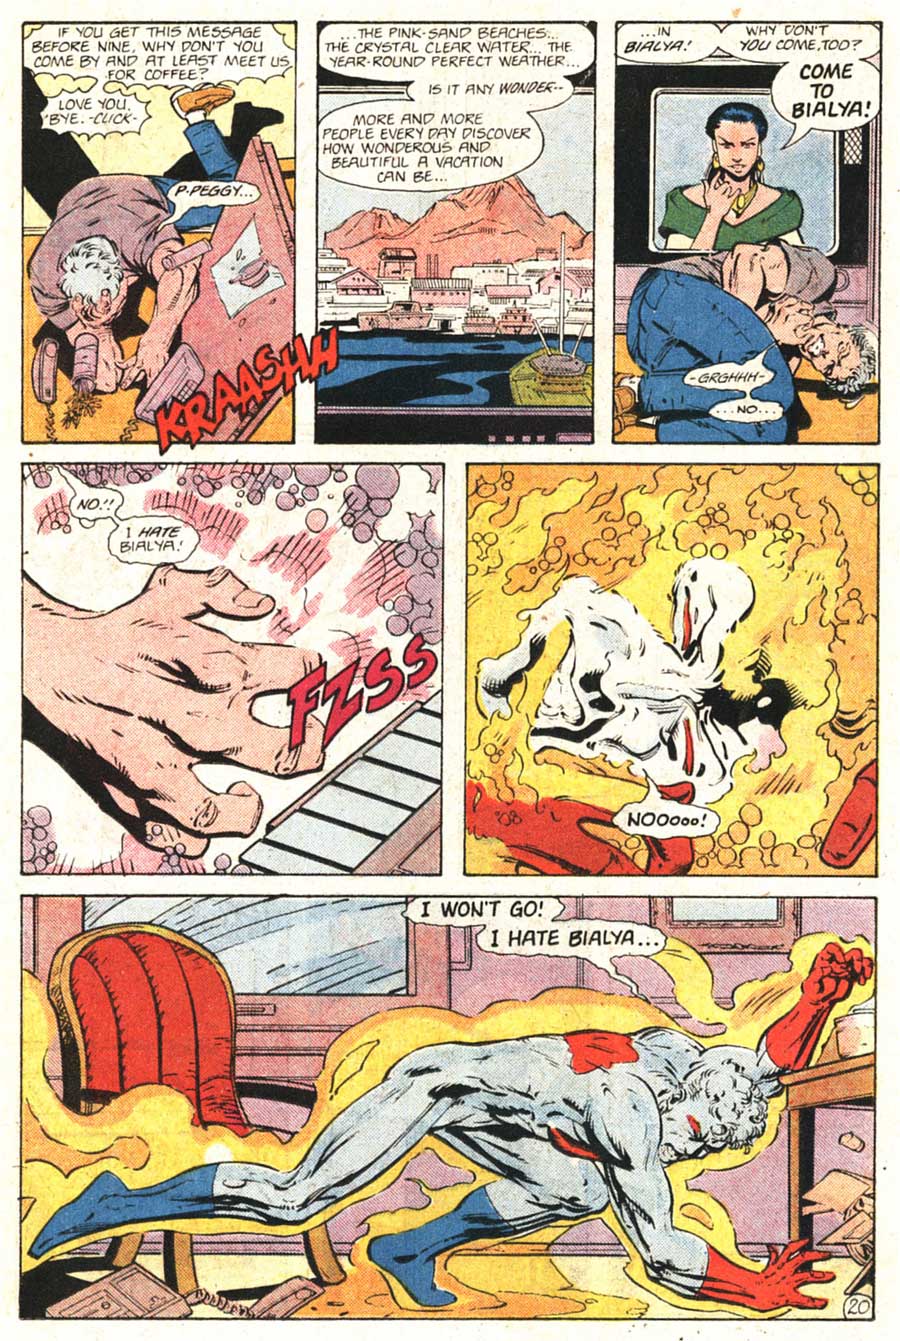 Captain Atom Annual #2 by Cary Bates, Greg Weisman, Paris Cullins & Bob Smith